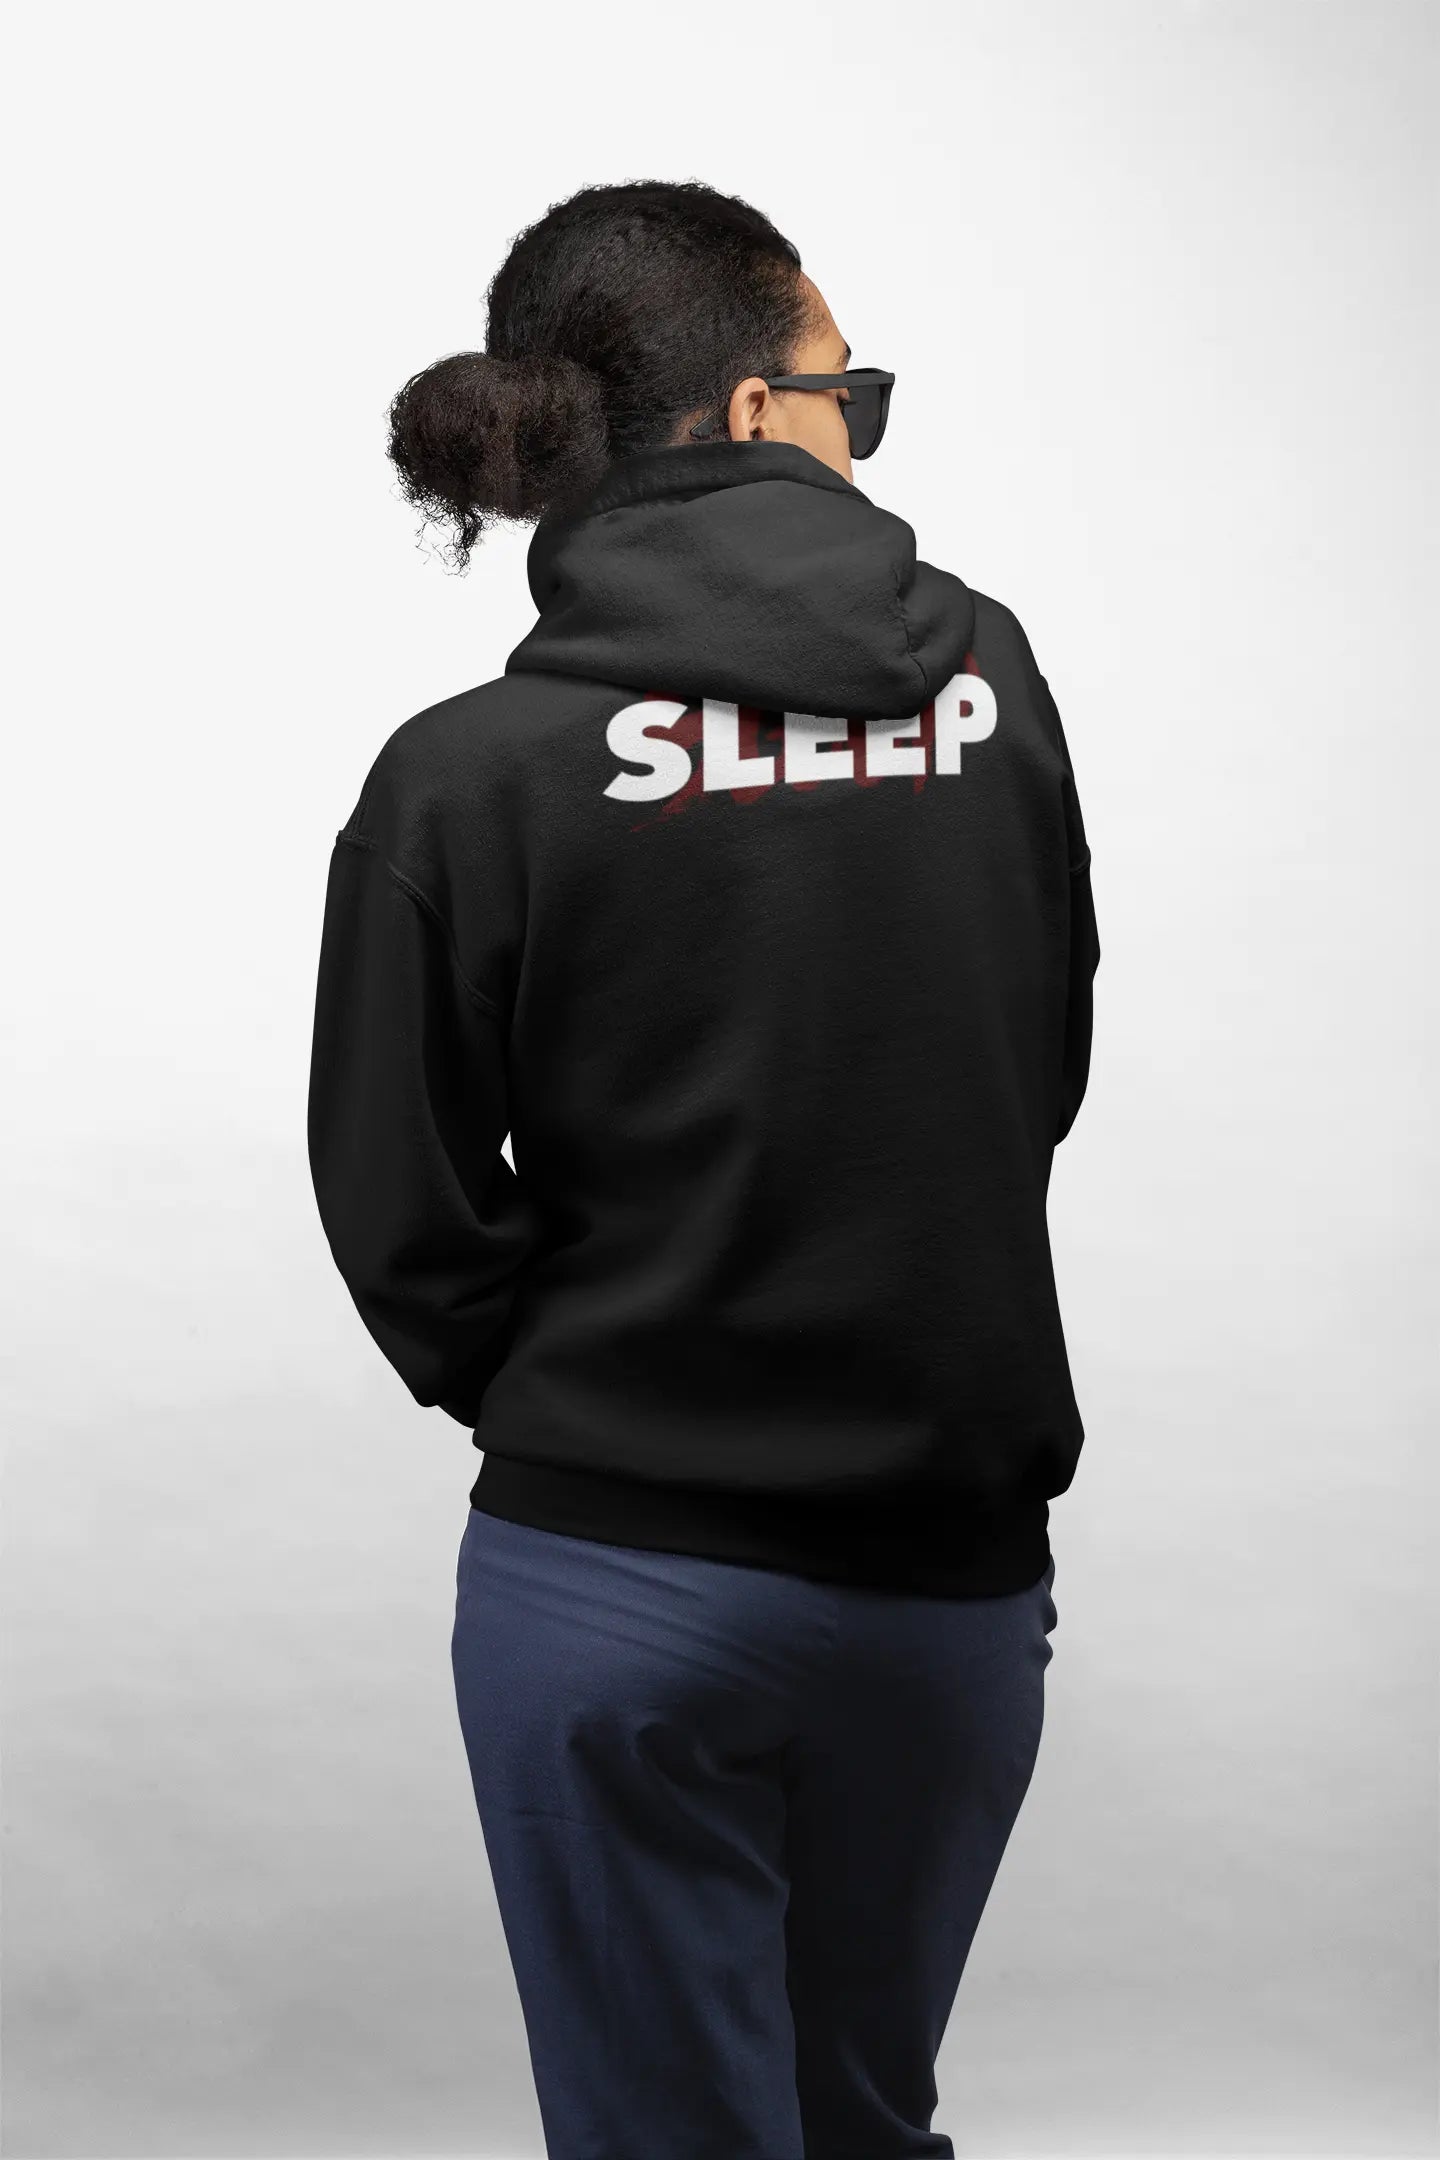 The Sleep Premium Unisex Hoodie